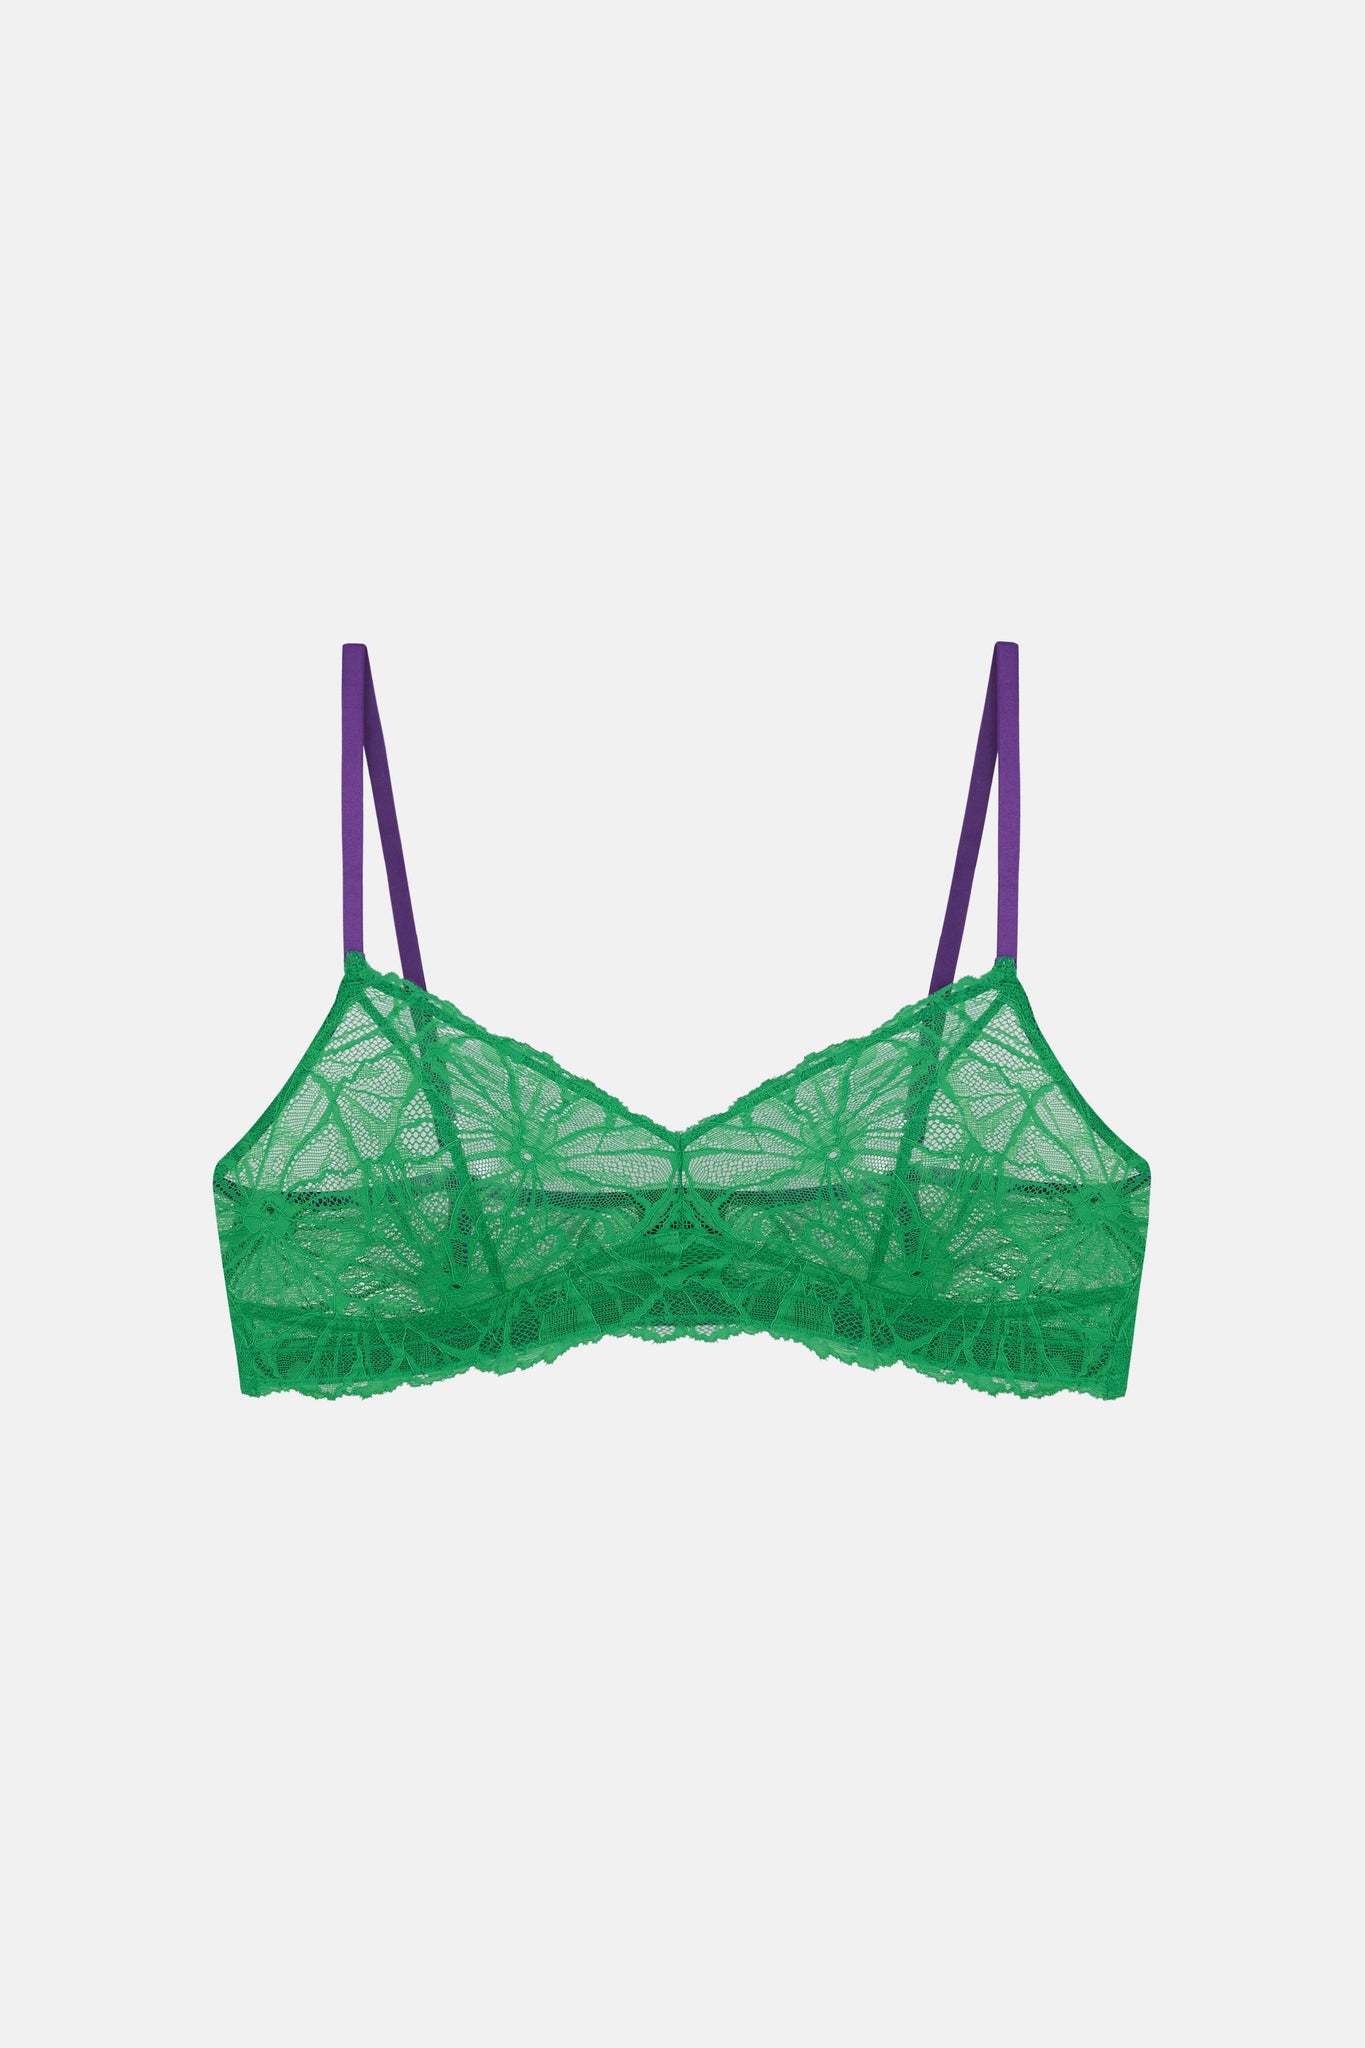 Free People, Dora Larsen dorothee lace triangle bra NWT size 6 (medium)